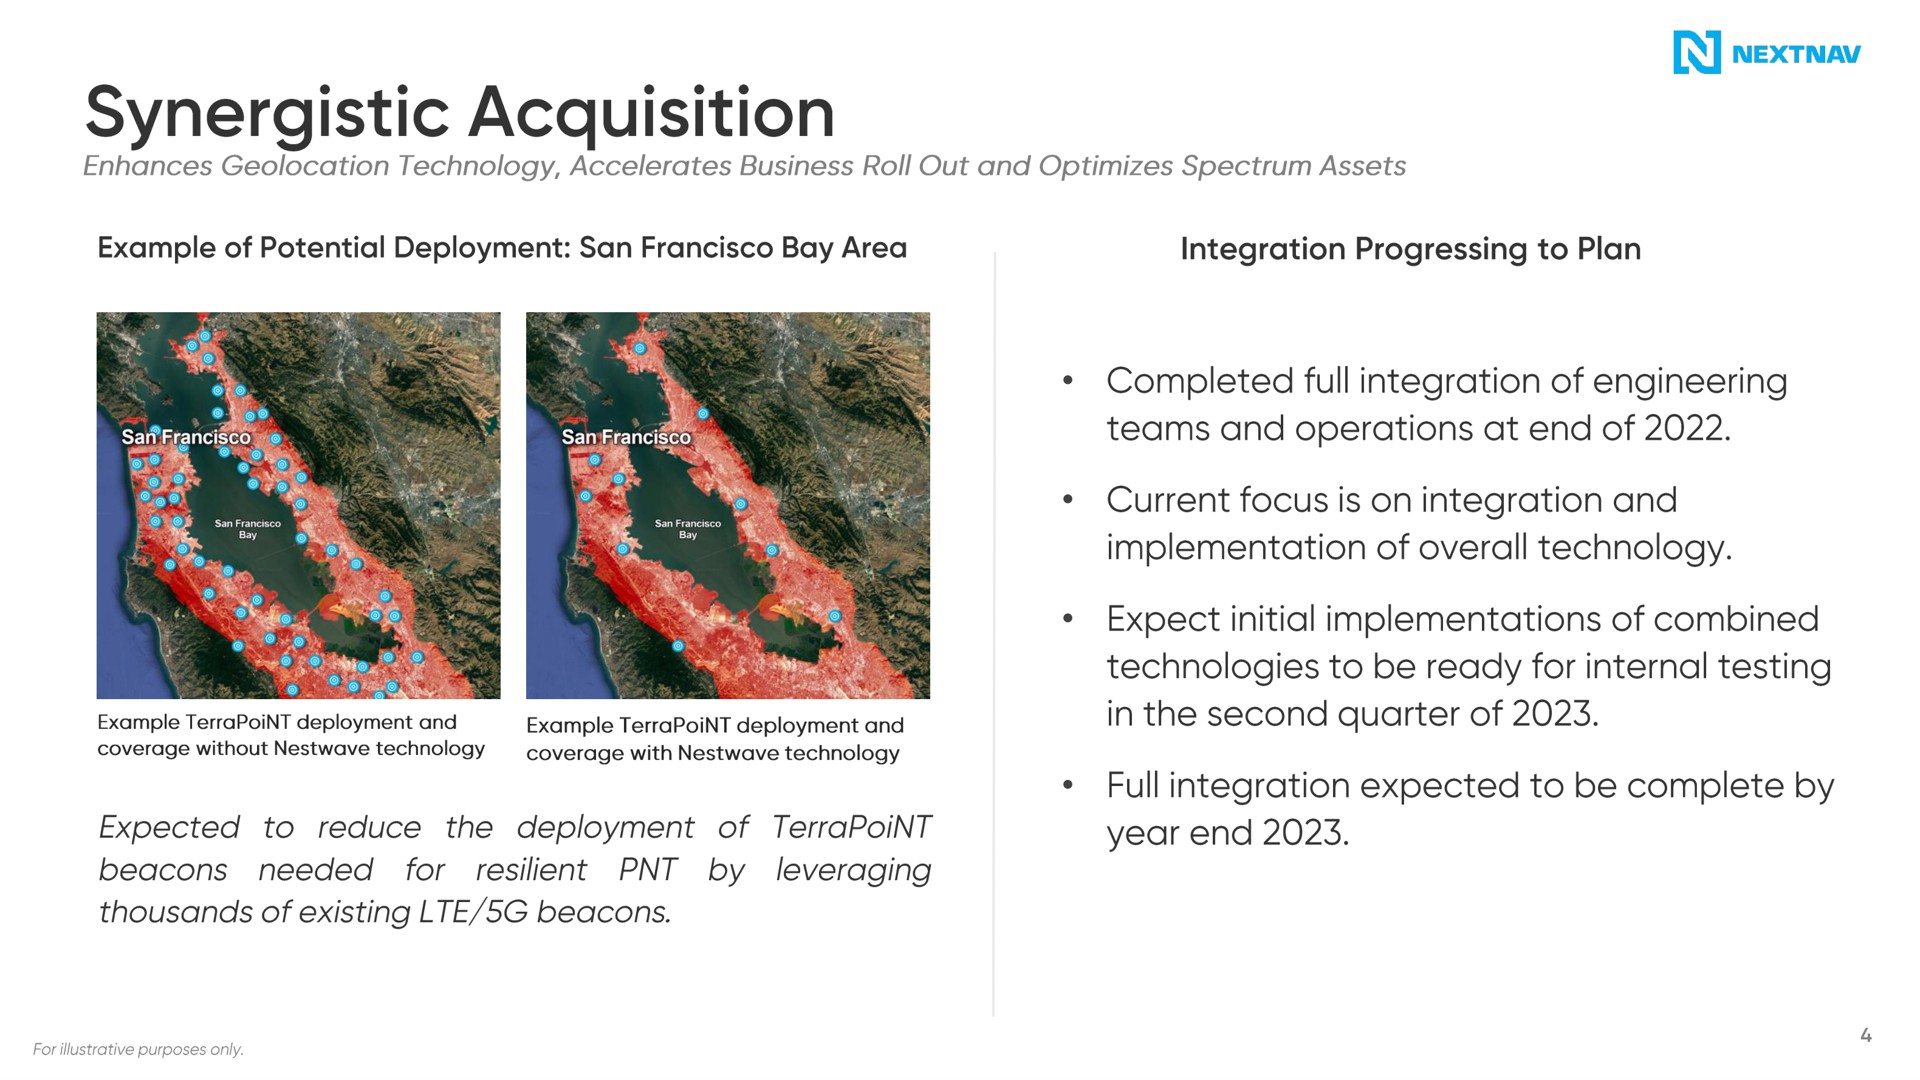 synergistic acquisition | NextNav